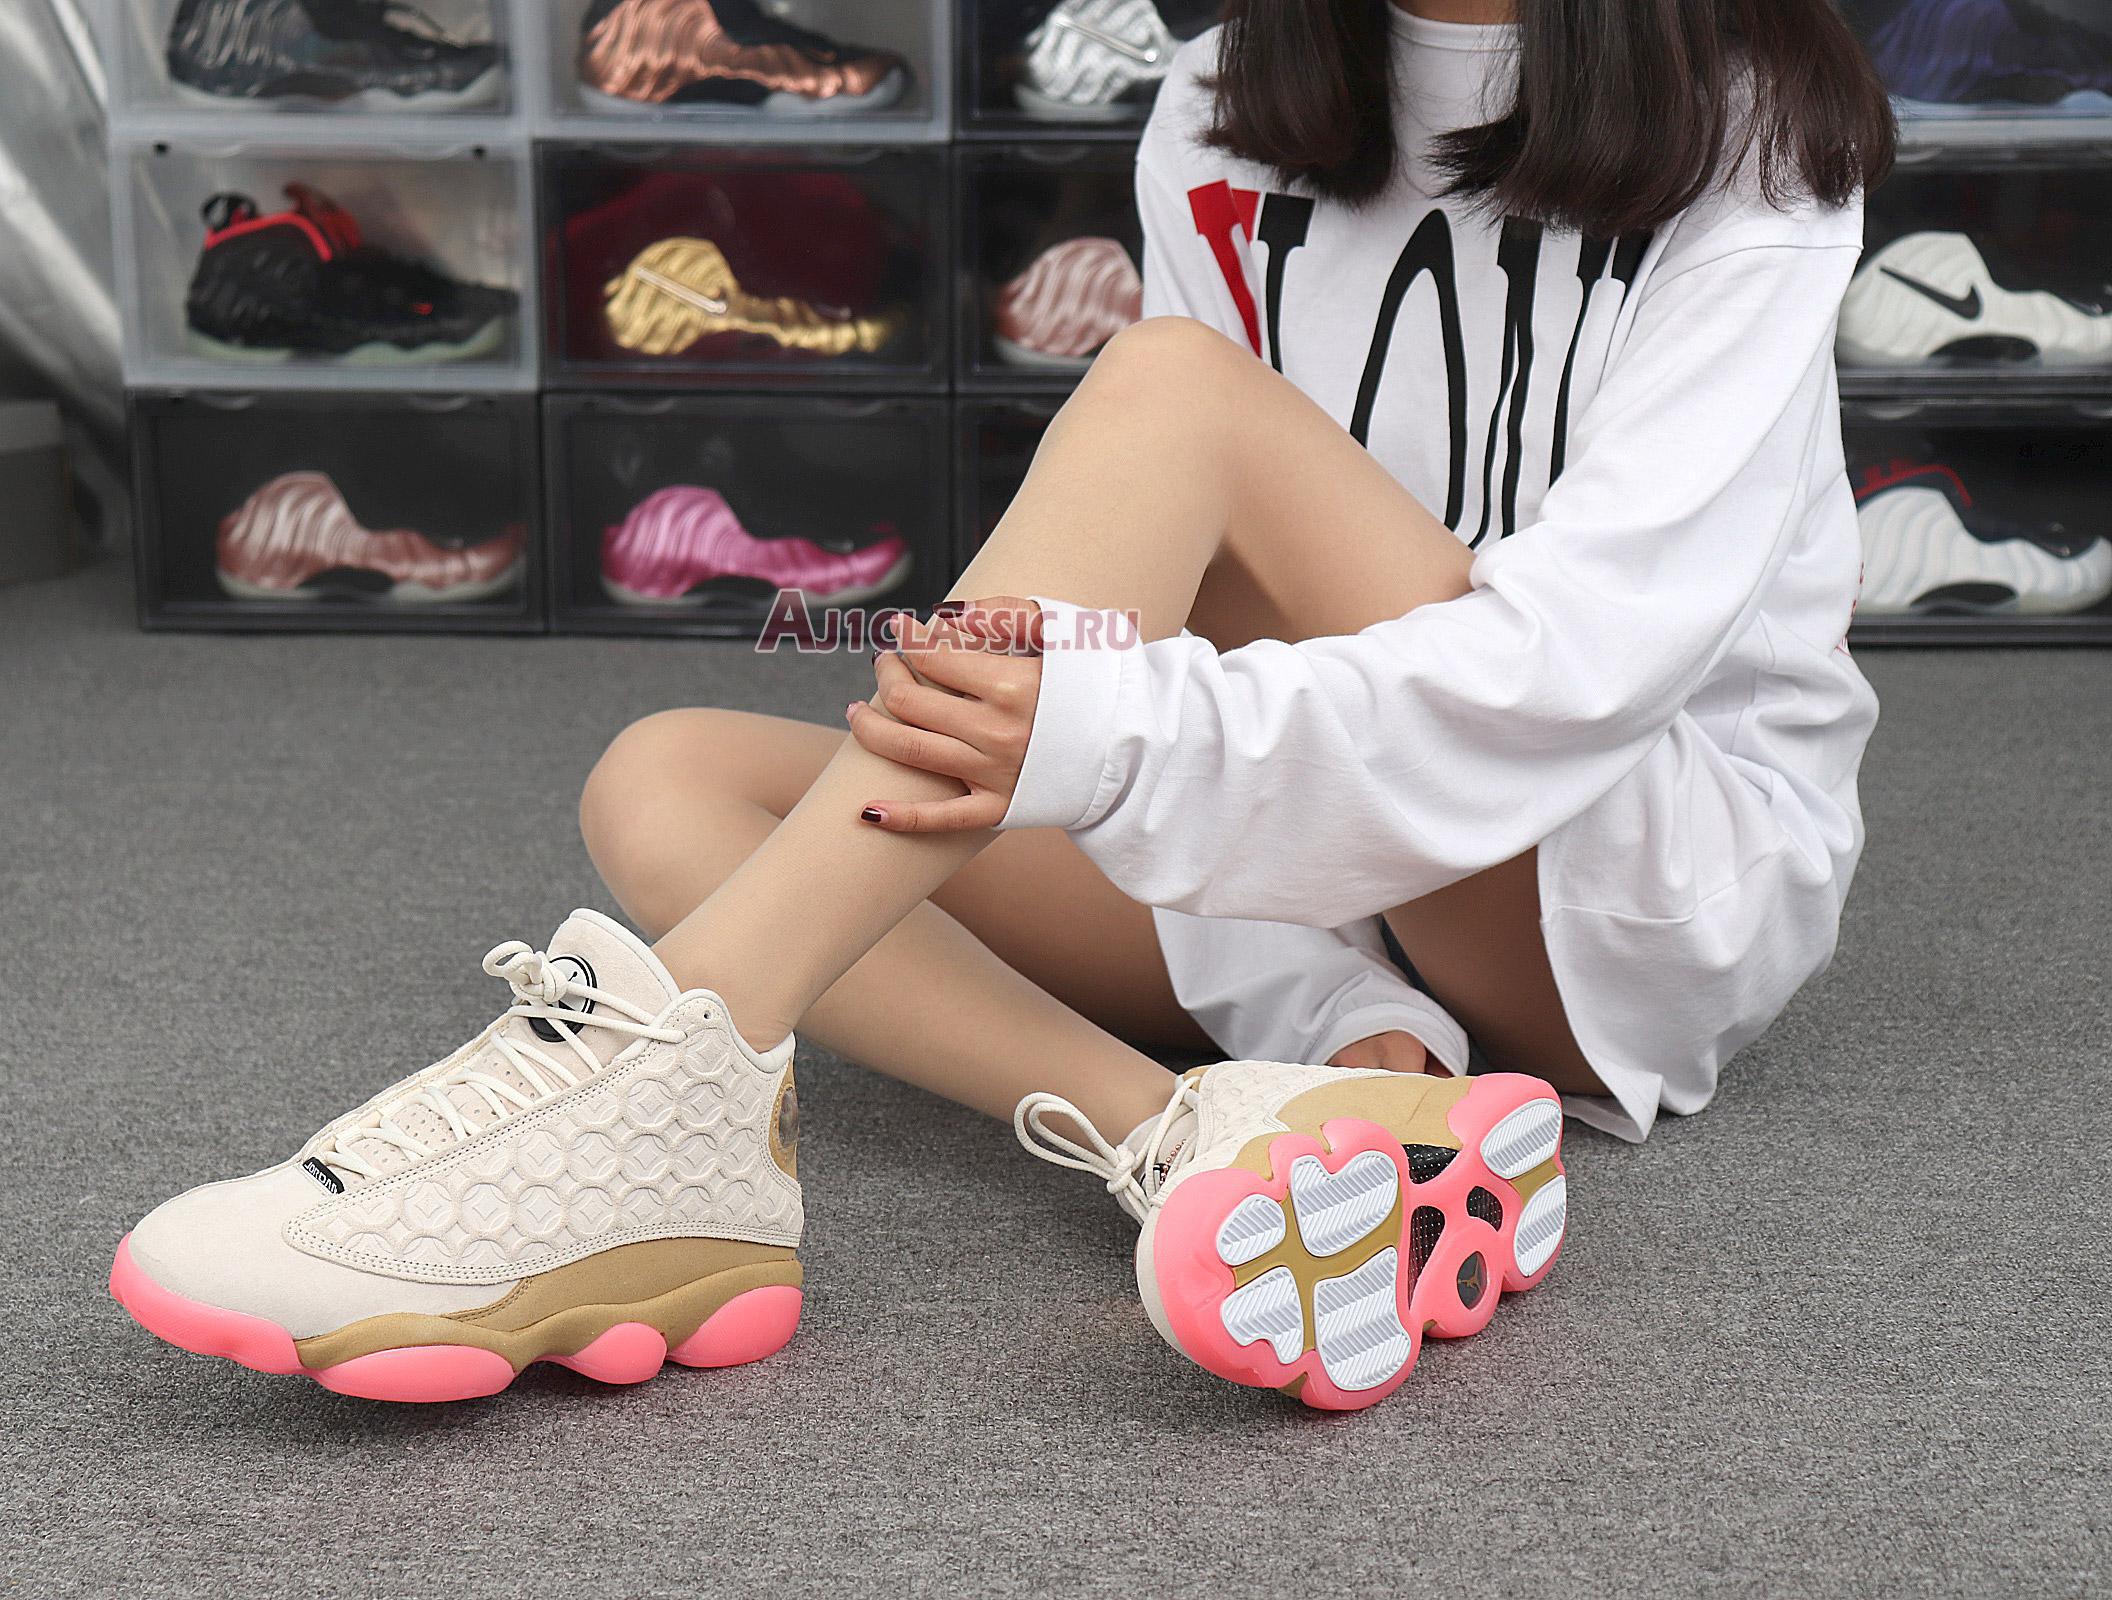 Air Jordan 13 Retro Chinese New Year CW4409-100 Pale Ivory/Black-Digital Pink-Club Gold Sneakers